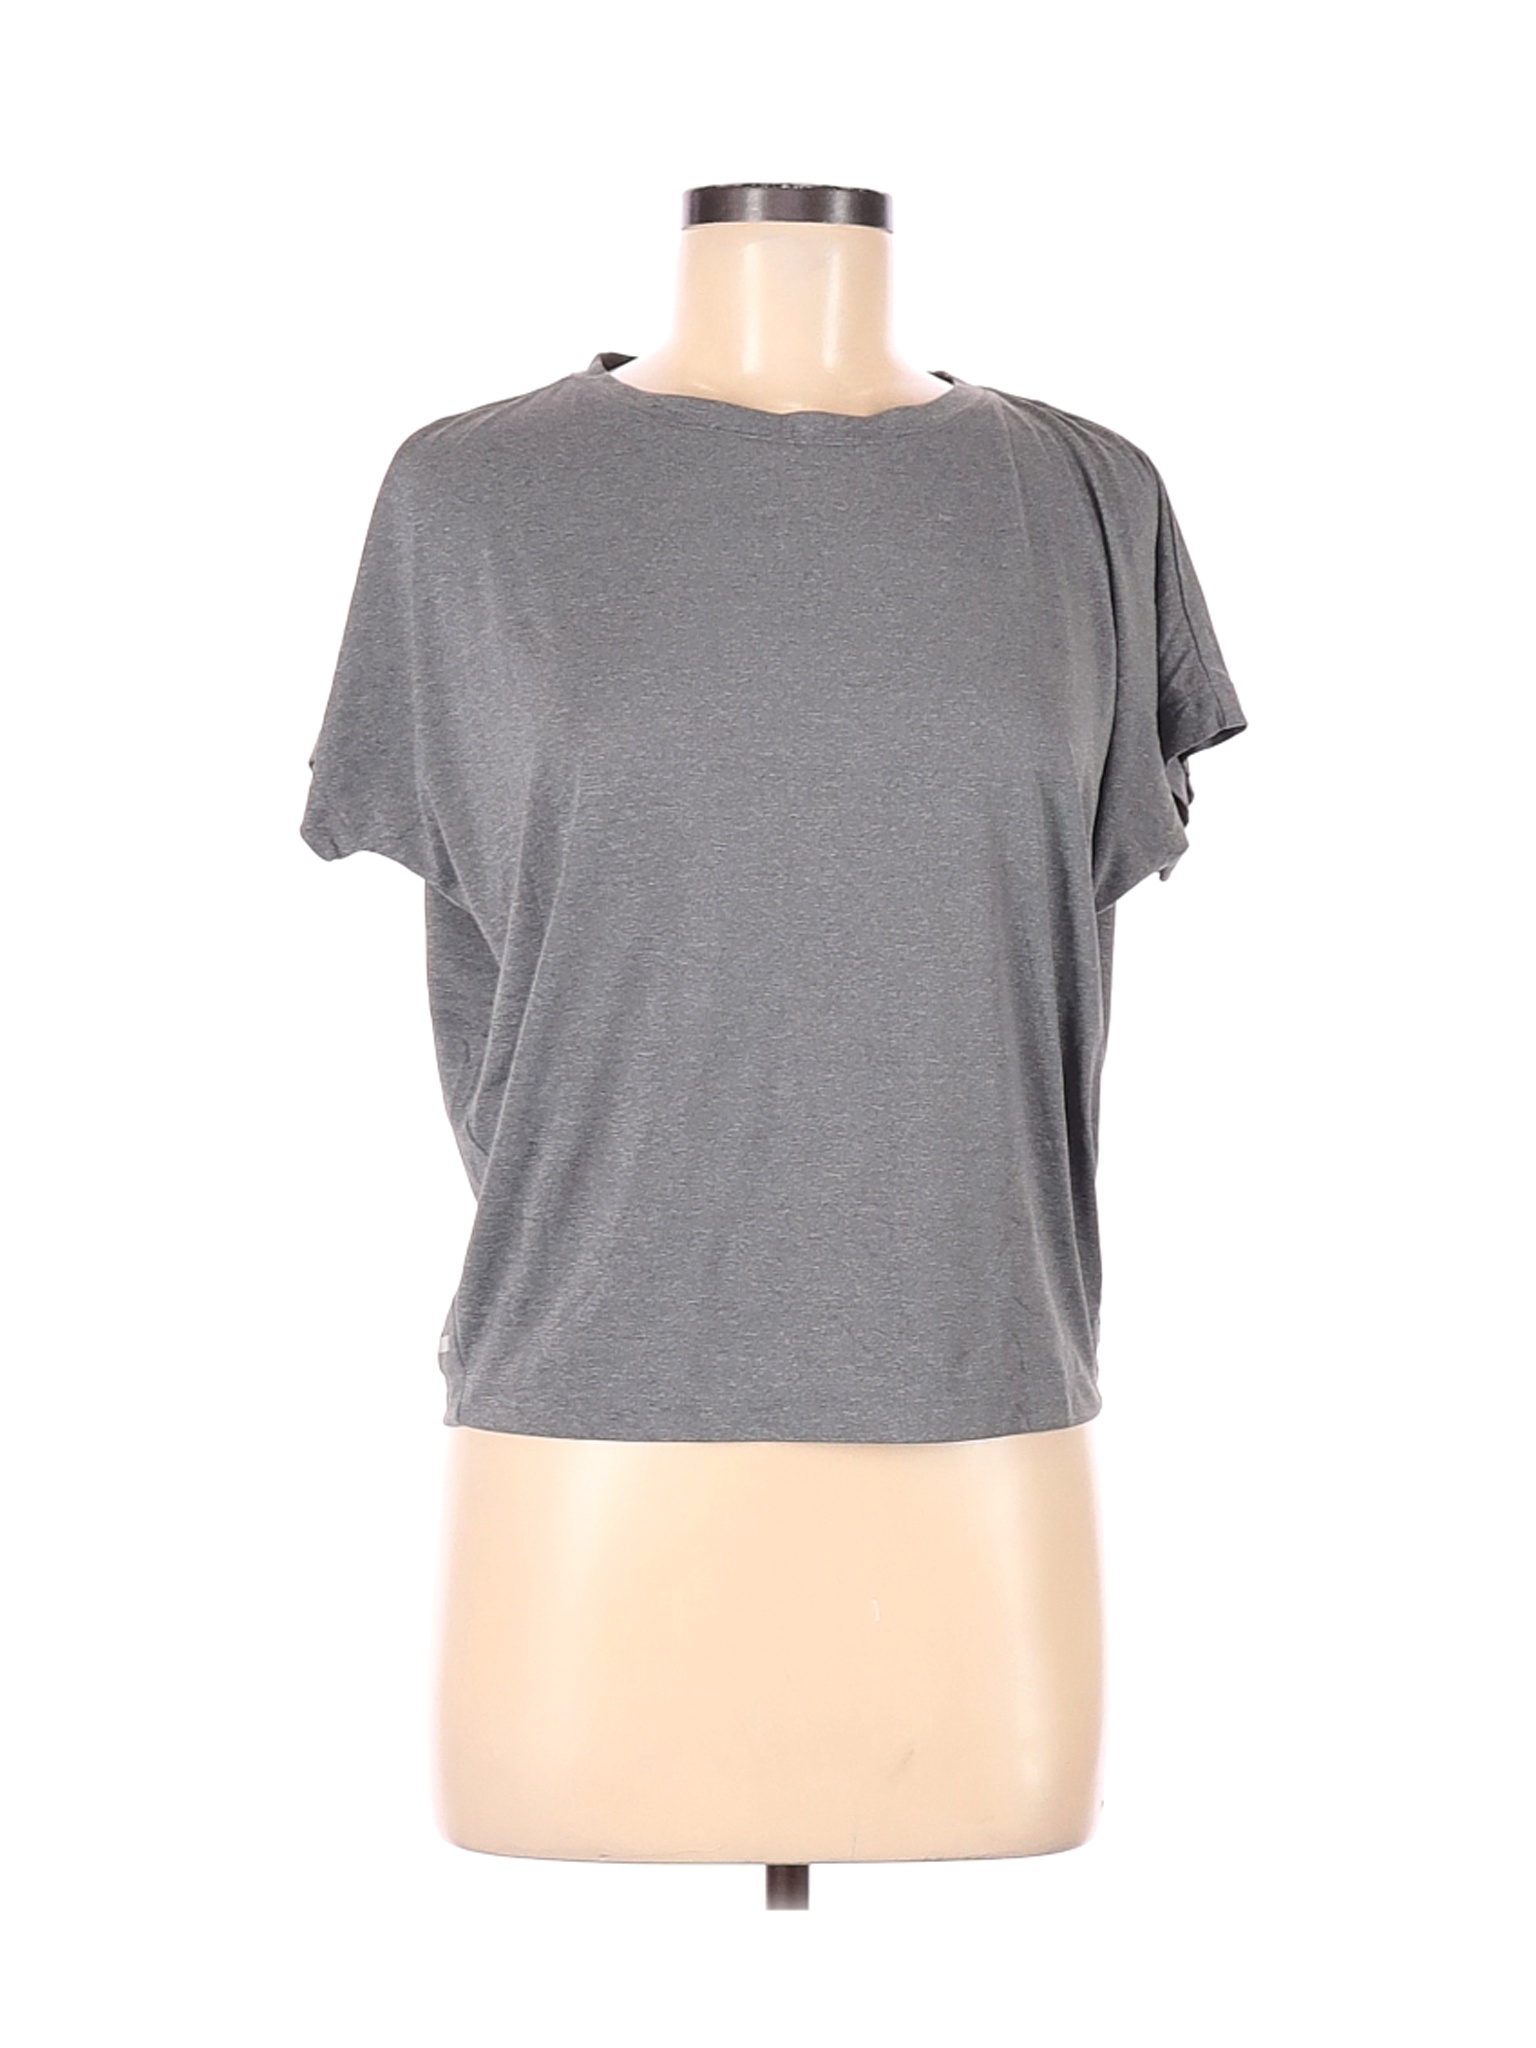 Assorted Brands Women Gray Active T-Shirt XS | eBay